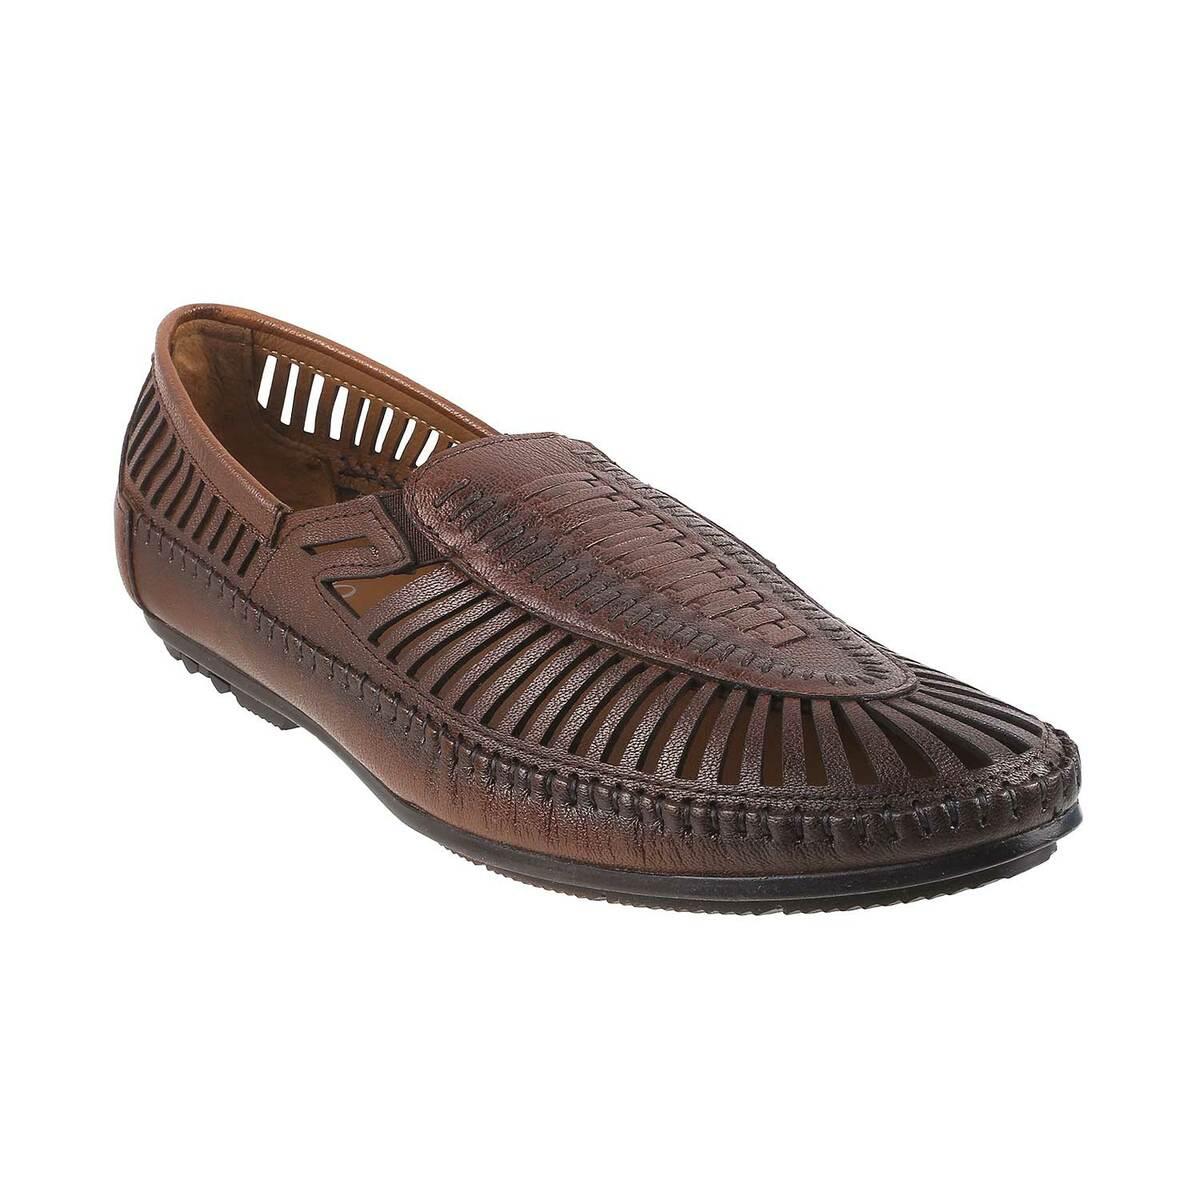 Buy Metro Men's Black Toe Ring Sandals for Men at Best Price @ Tata CLiQ-sgquangbinhtourist.com.vn